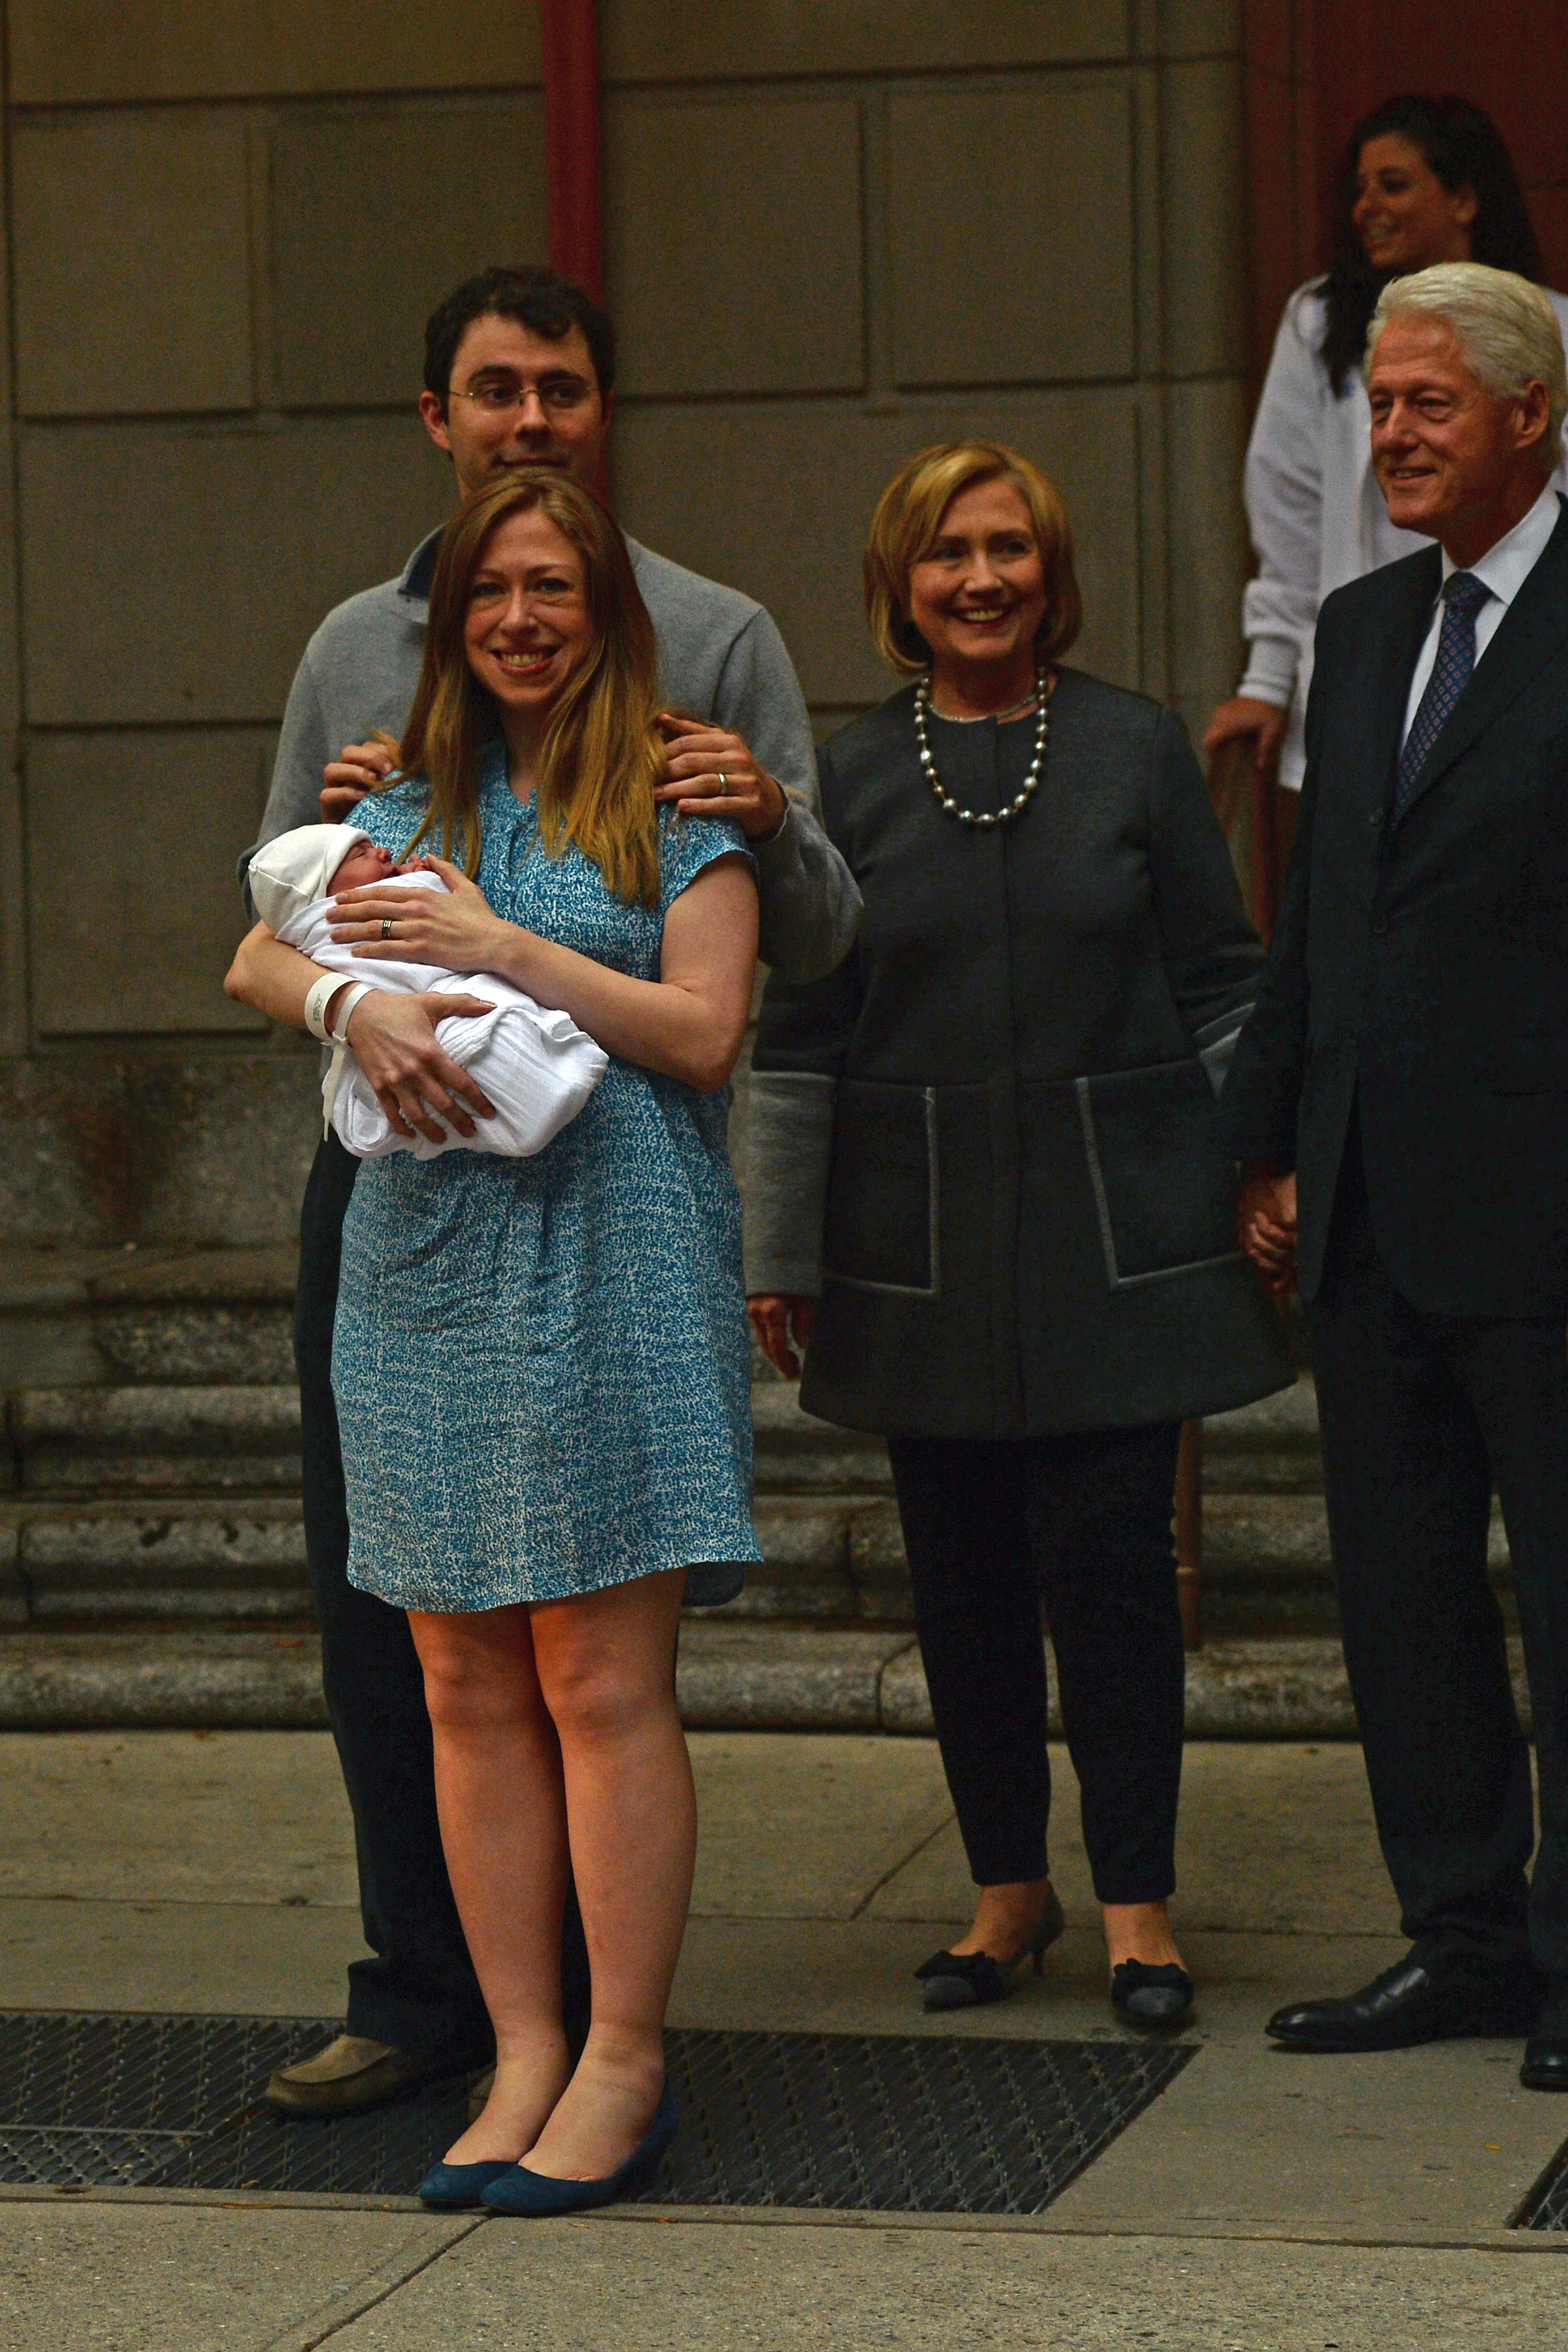 Chelsea Clinton and her husband Marc Mezvinsky leave with their newborn daughter, Charlotte Clinton Mezvinsky. (Photo: infusny-160/Elder Ordonez/INFphoto.com/Newscom) 